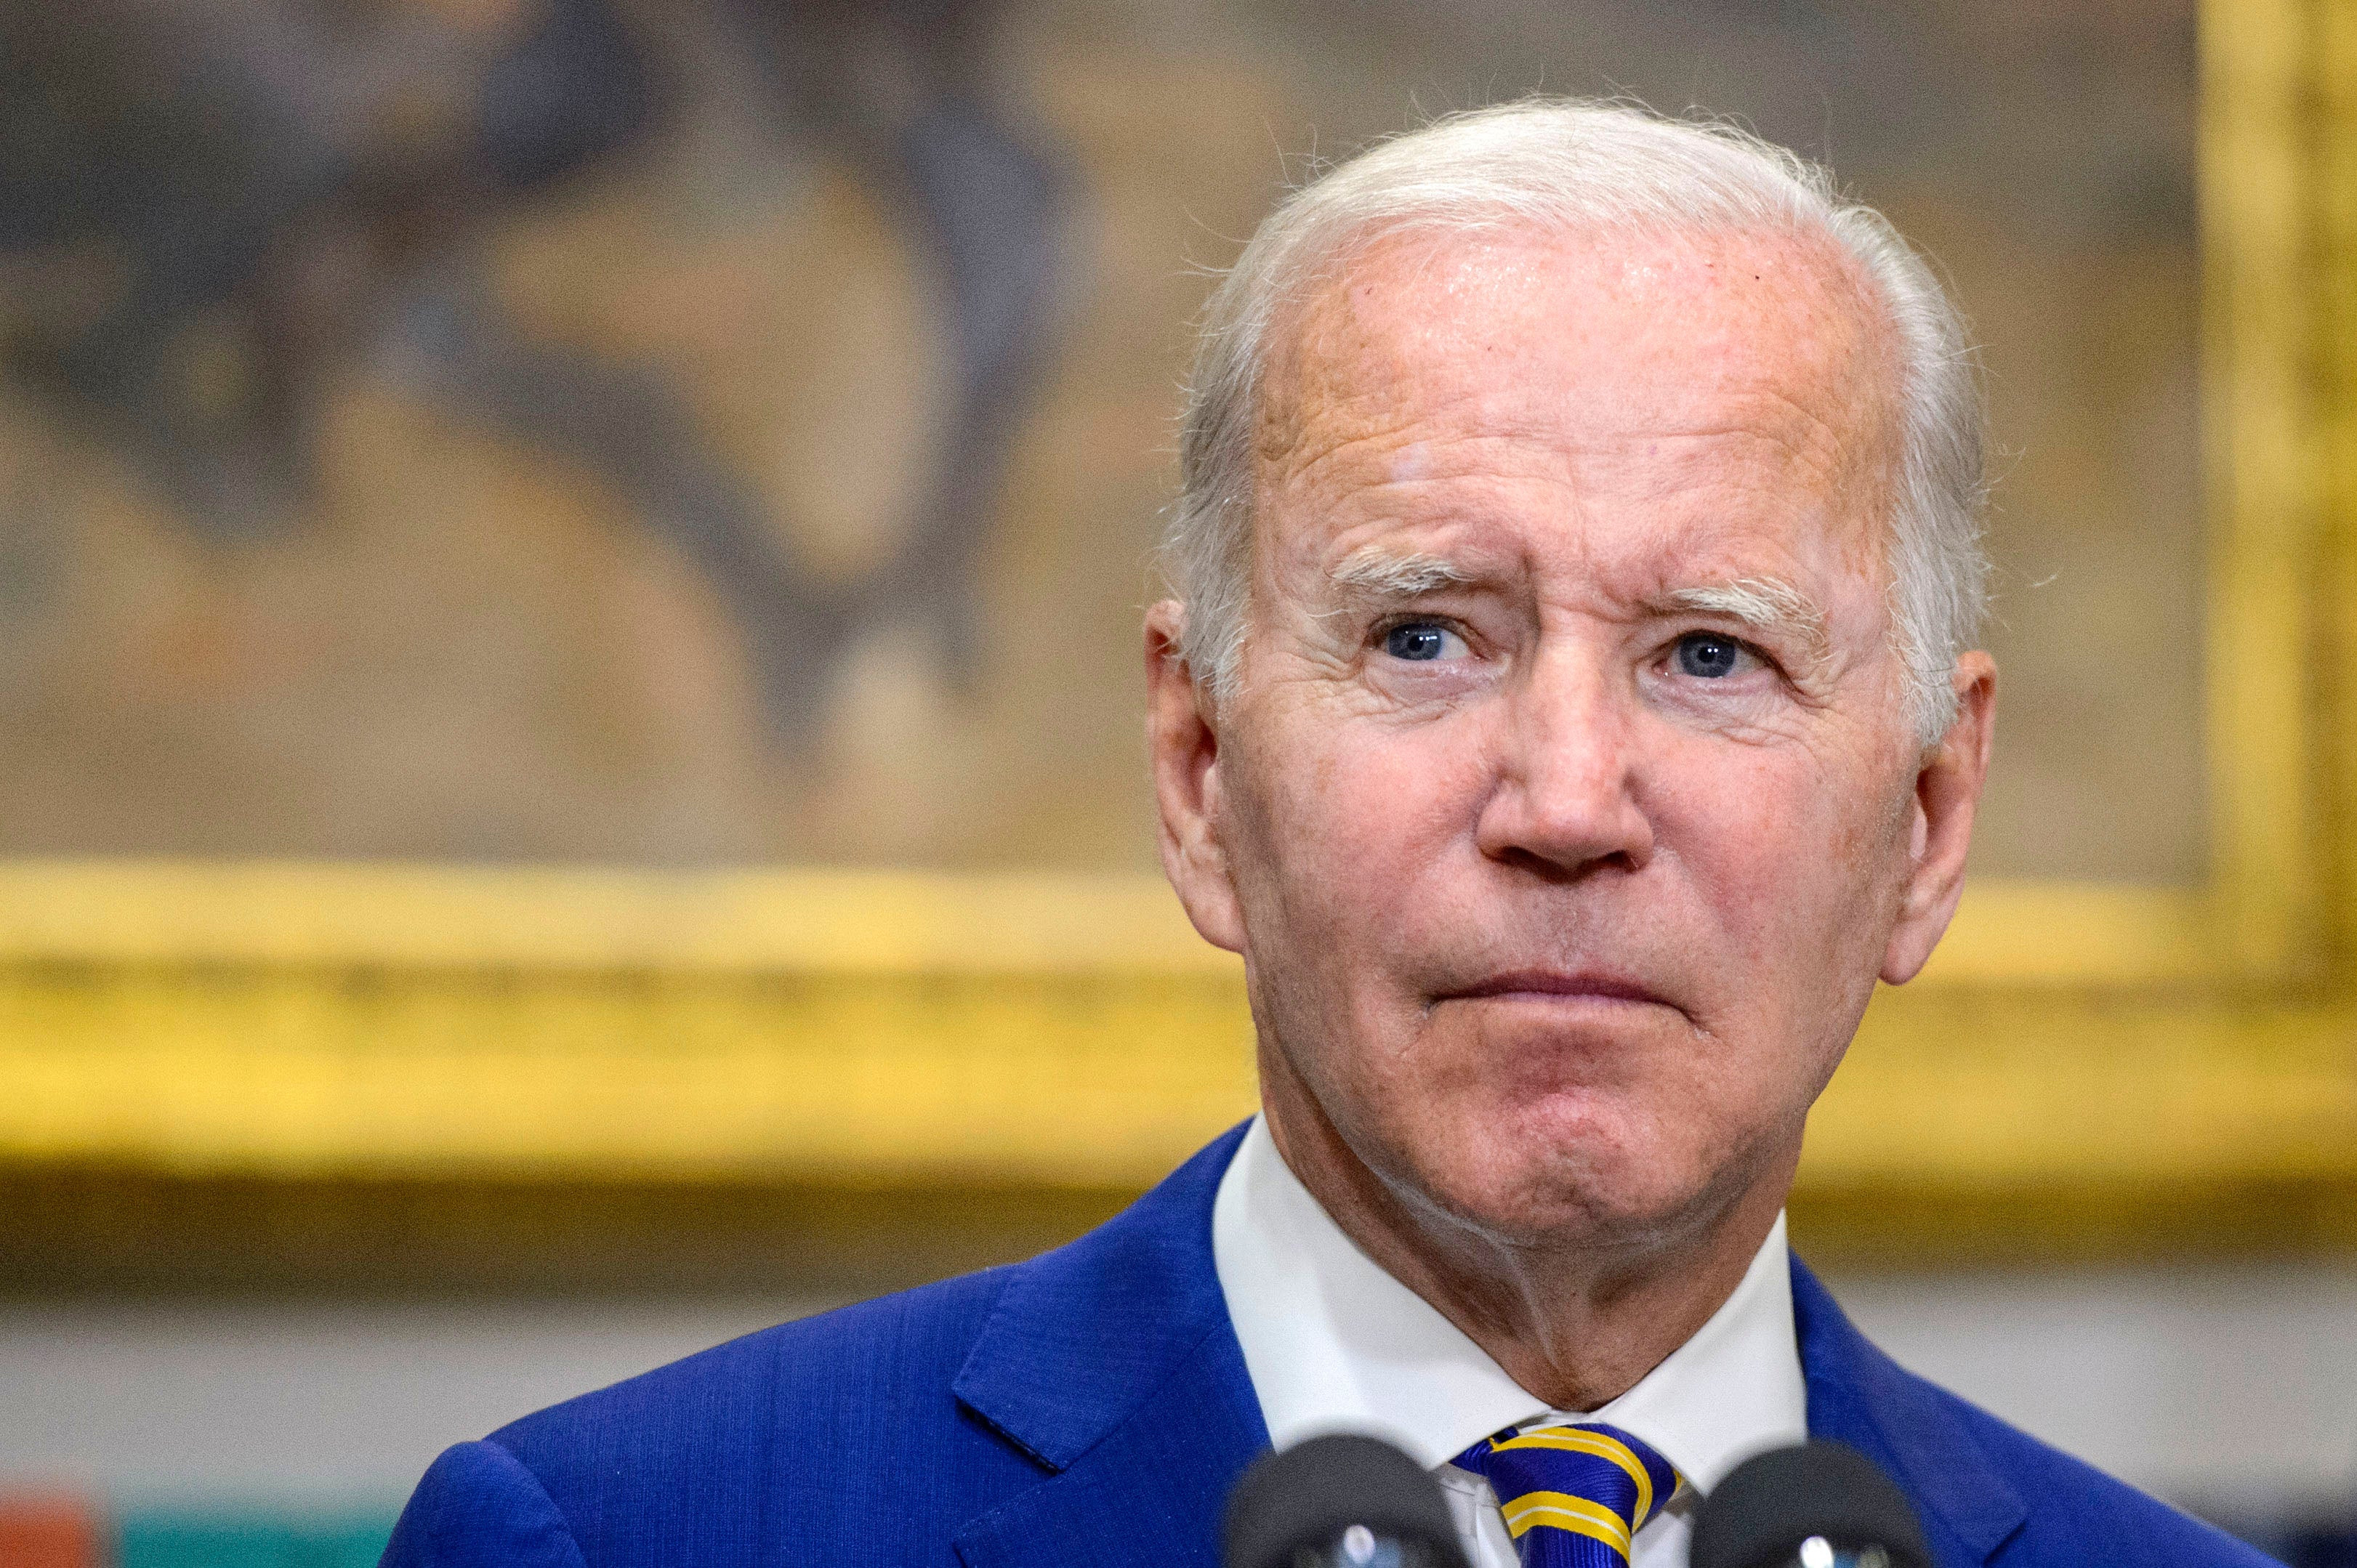 President Joe Biden after announcing a federal student loan relief plan on August 24, 2022.